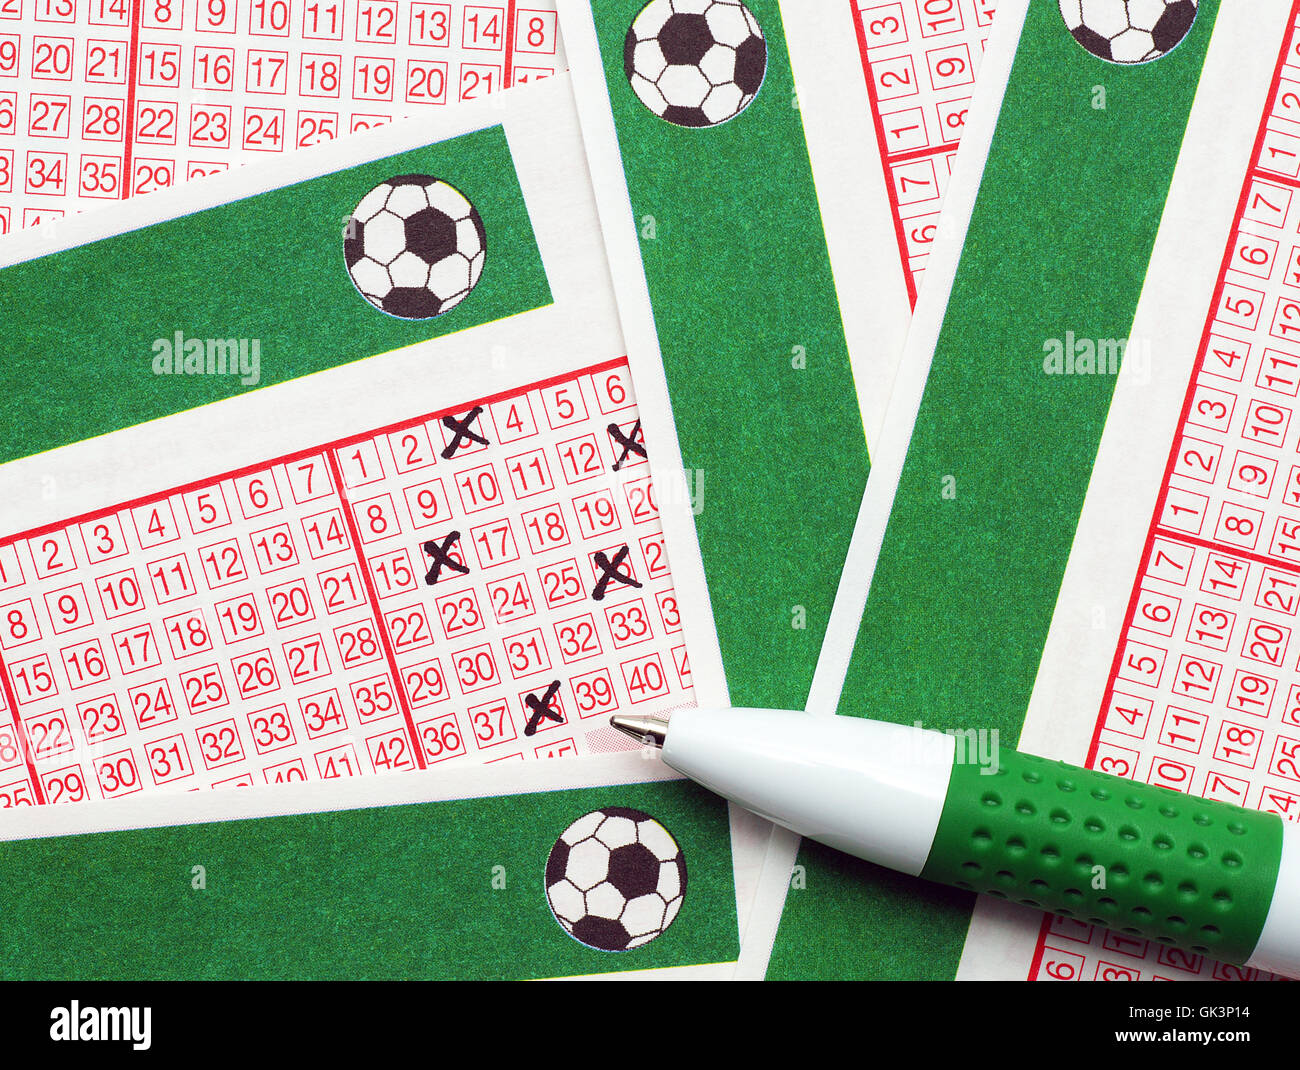 football toto / lotto - soccer lottery Stock Photo - Alamy